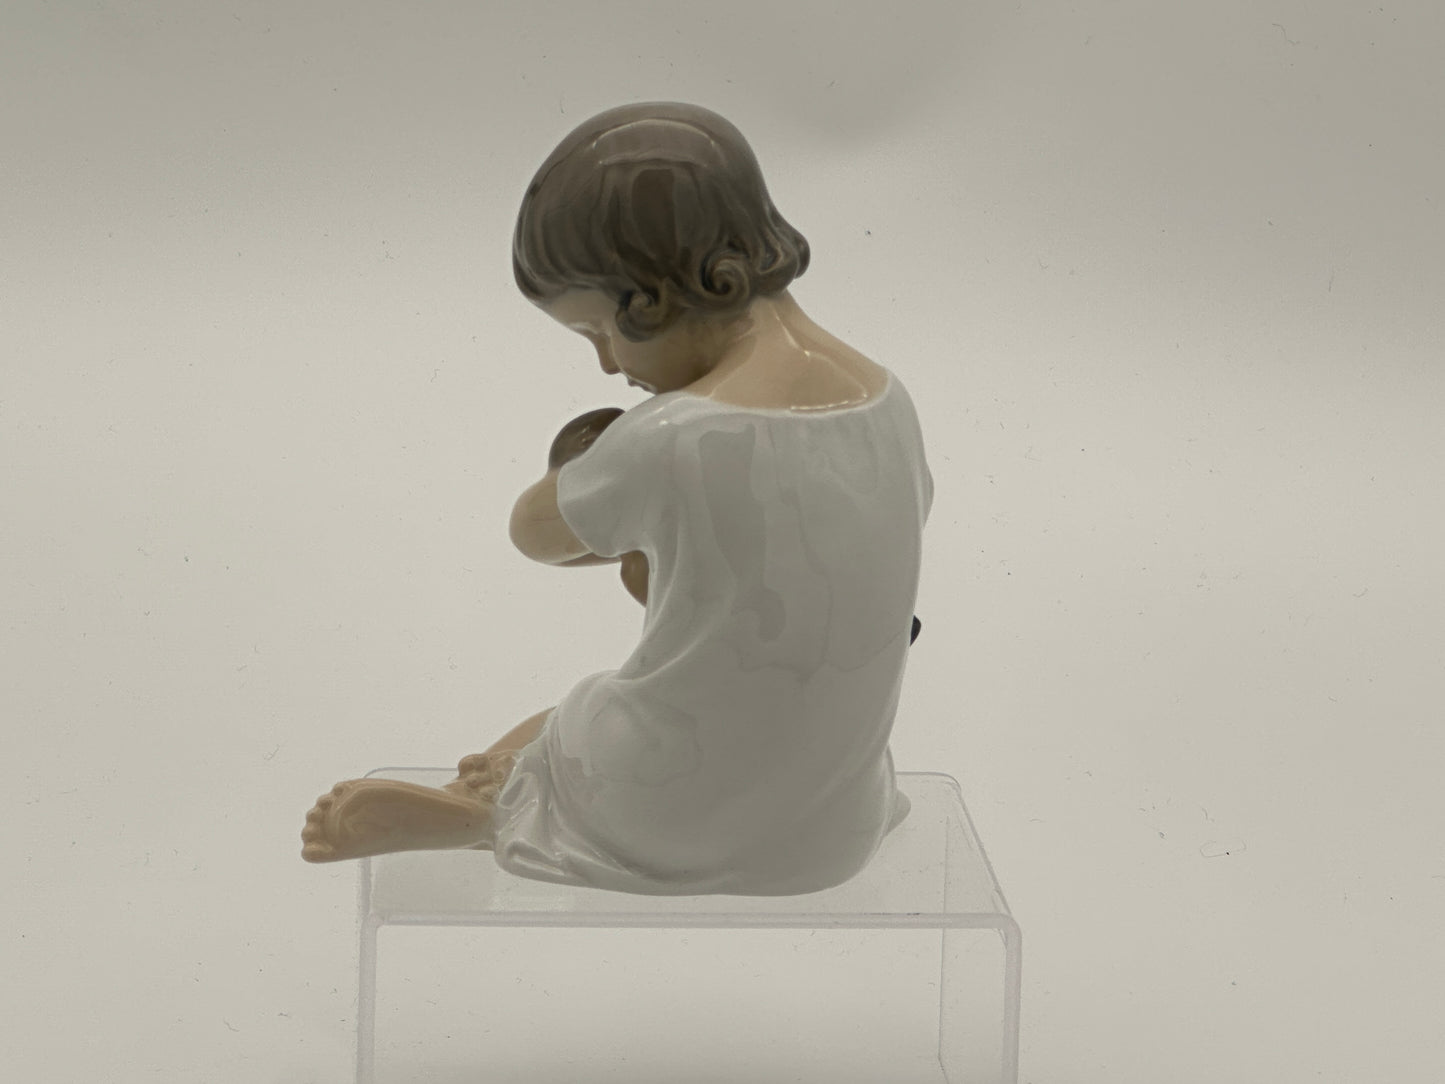 Royal Copenhagen - Girl with doll - No 1938 - 1960 - 13cm - Cute figurine - vintage figurine - old figurine -Scandinapan